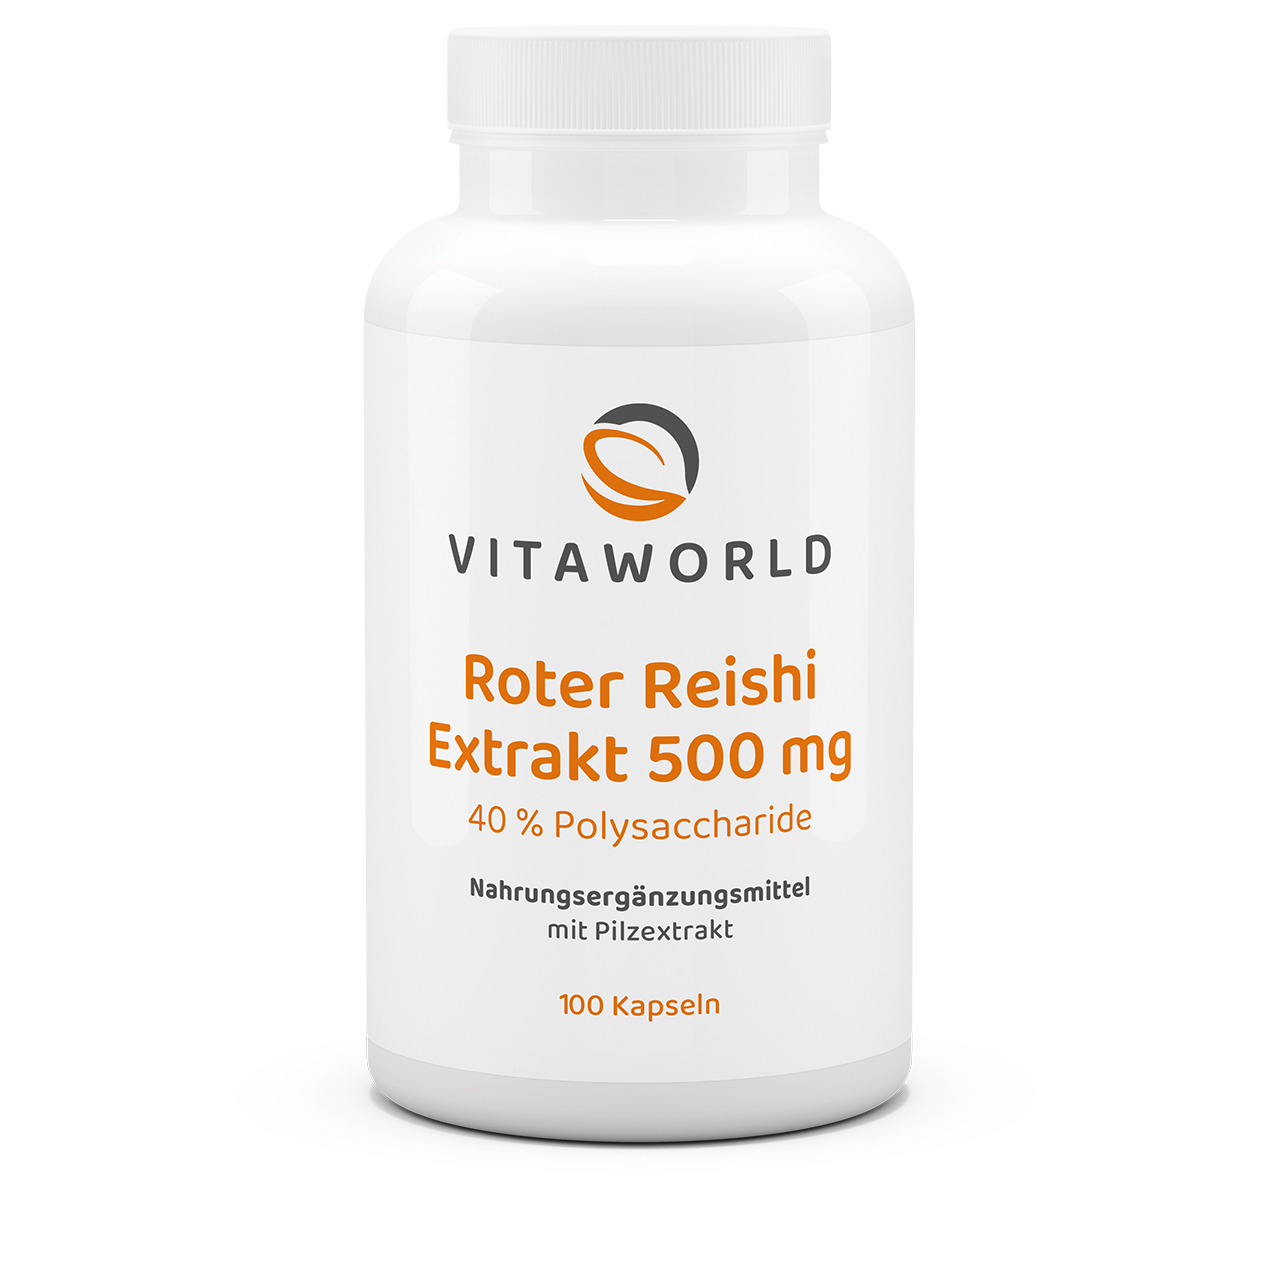 Roter Reishi Extrakt 500 mg 40% Polysaccharide (100 Kps)